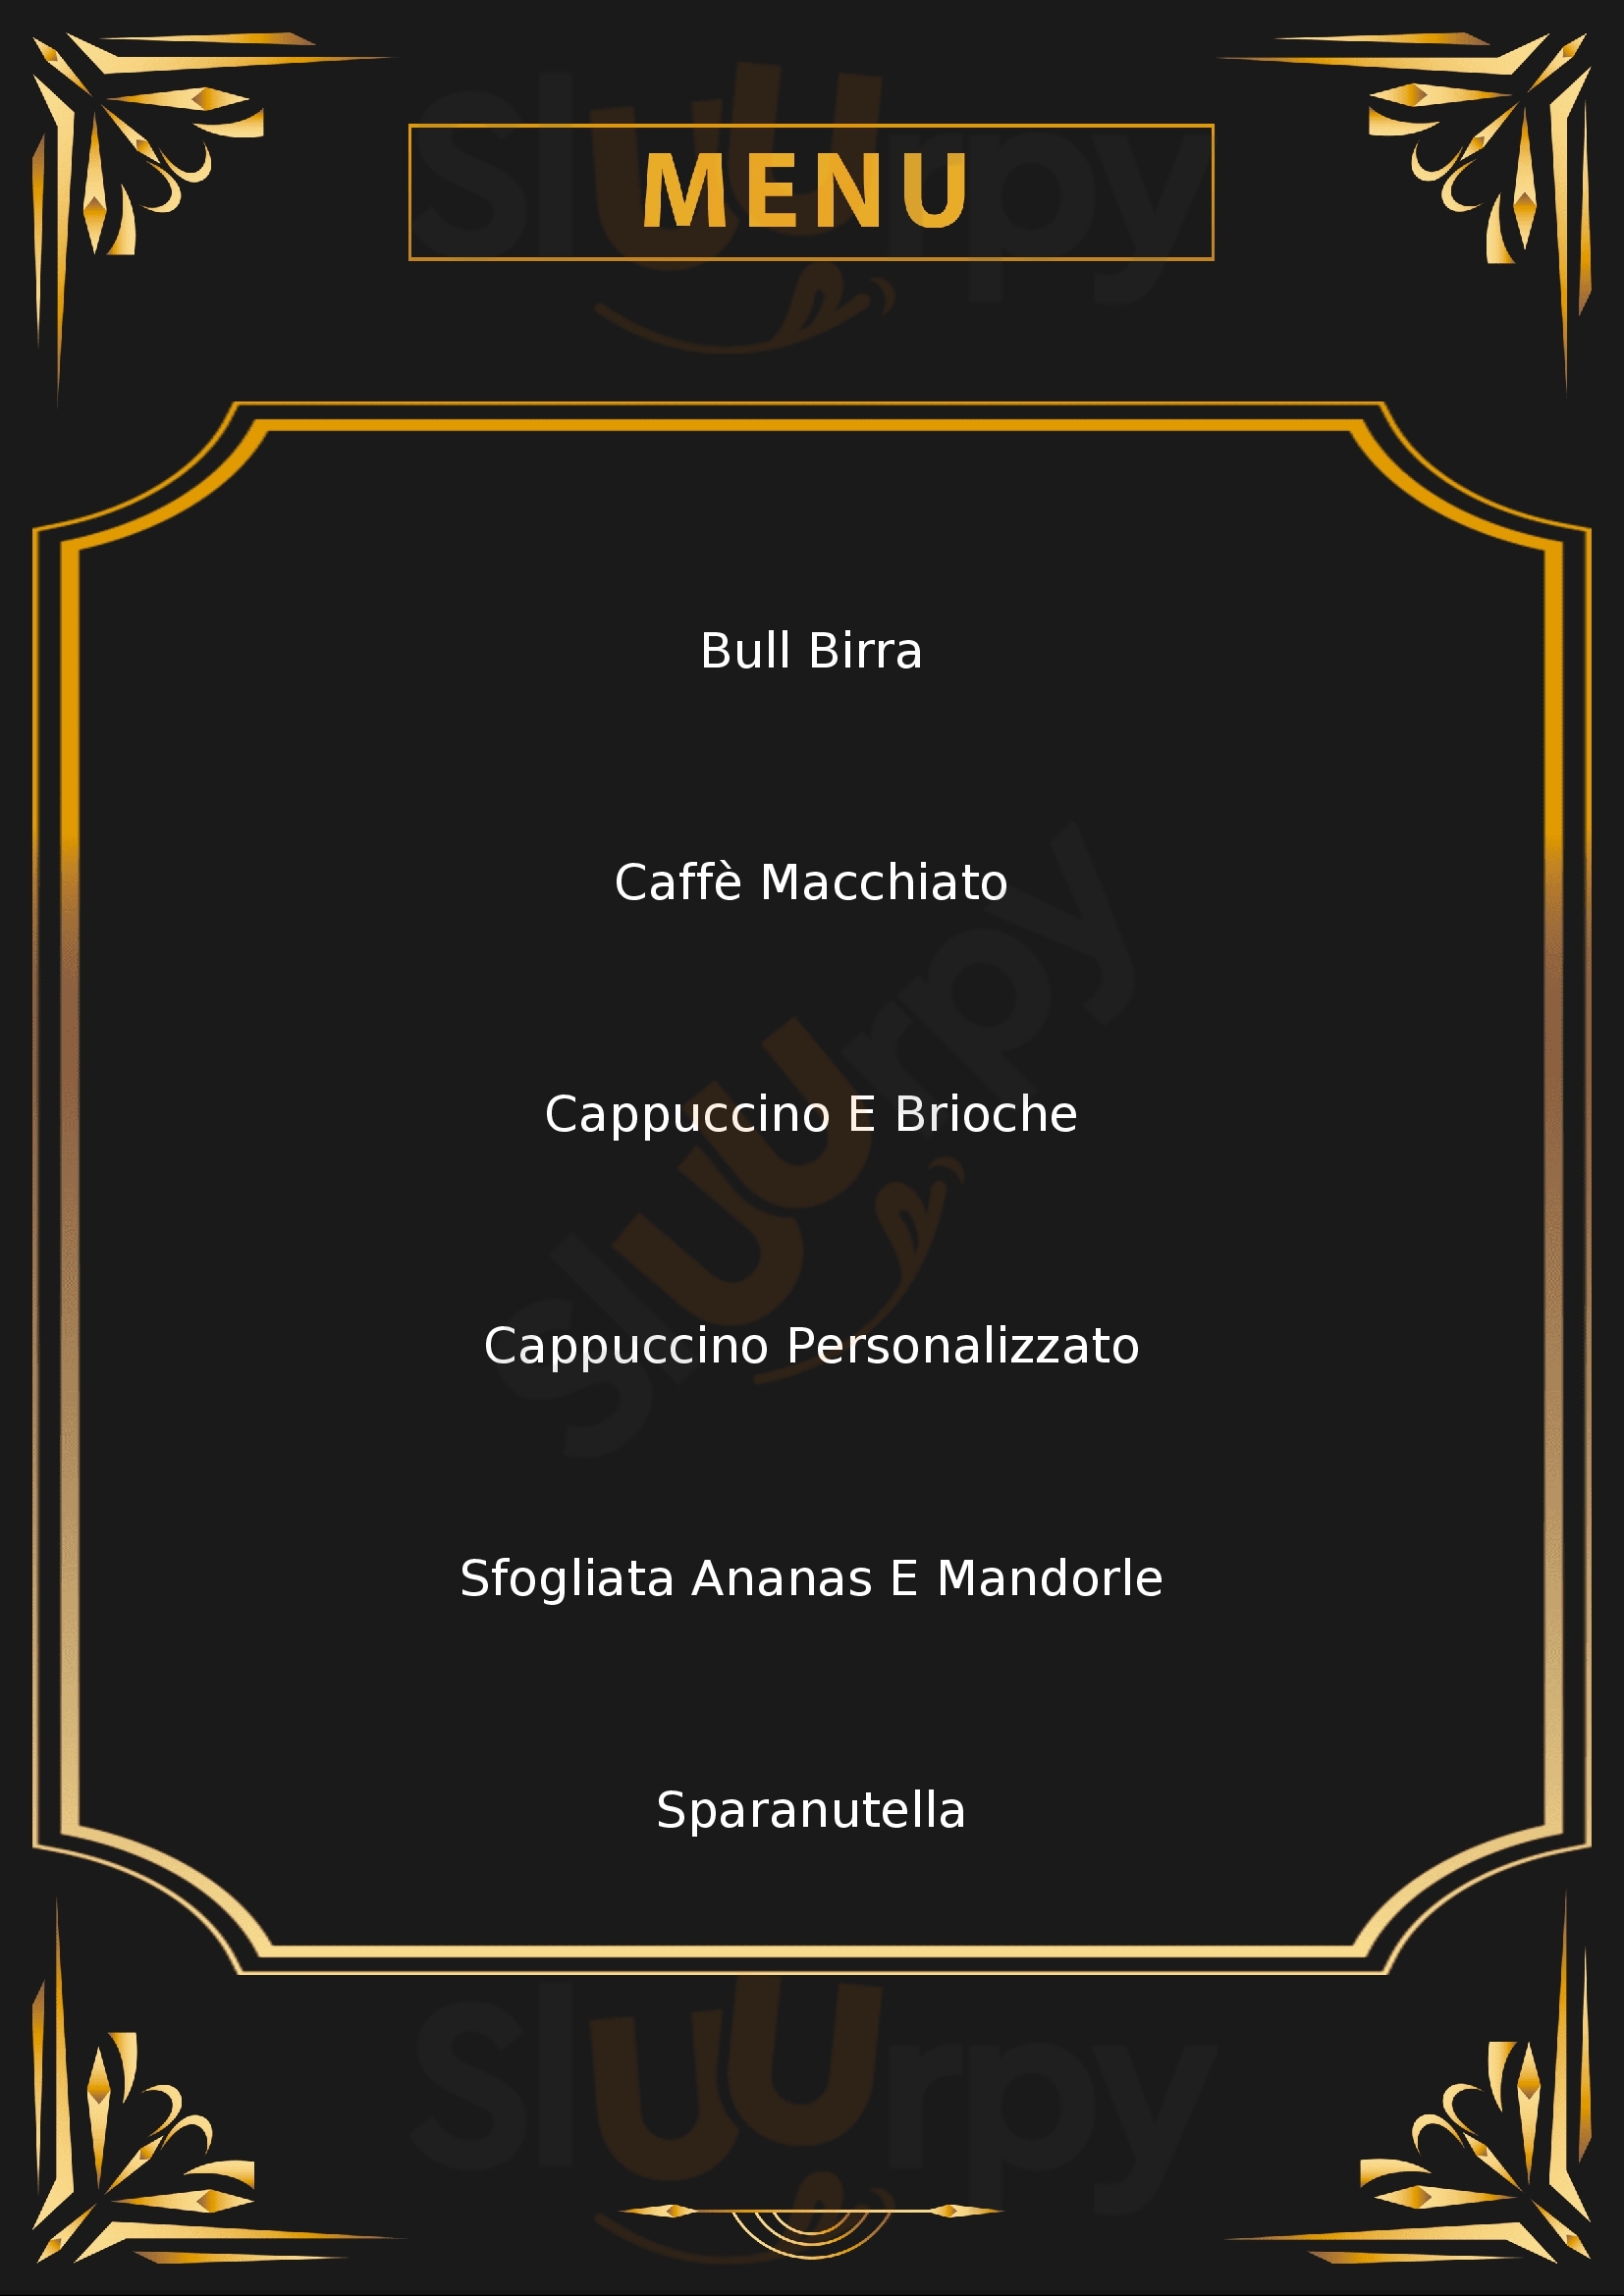 Scaccianoia Caffe Misano Adriatico menù 1 pagina